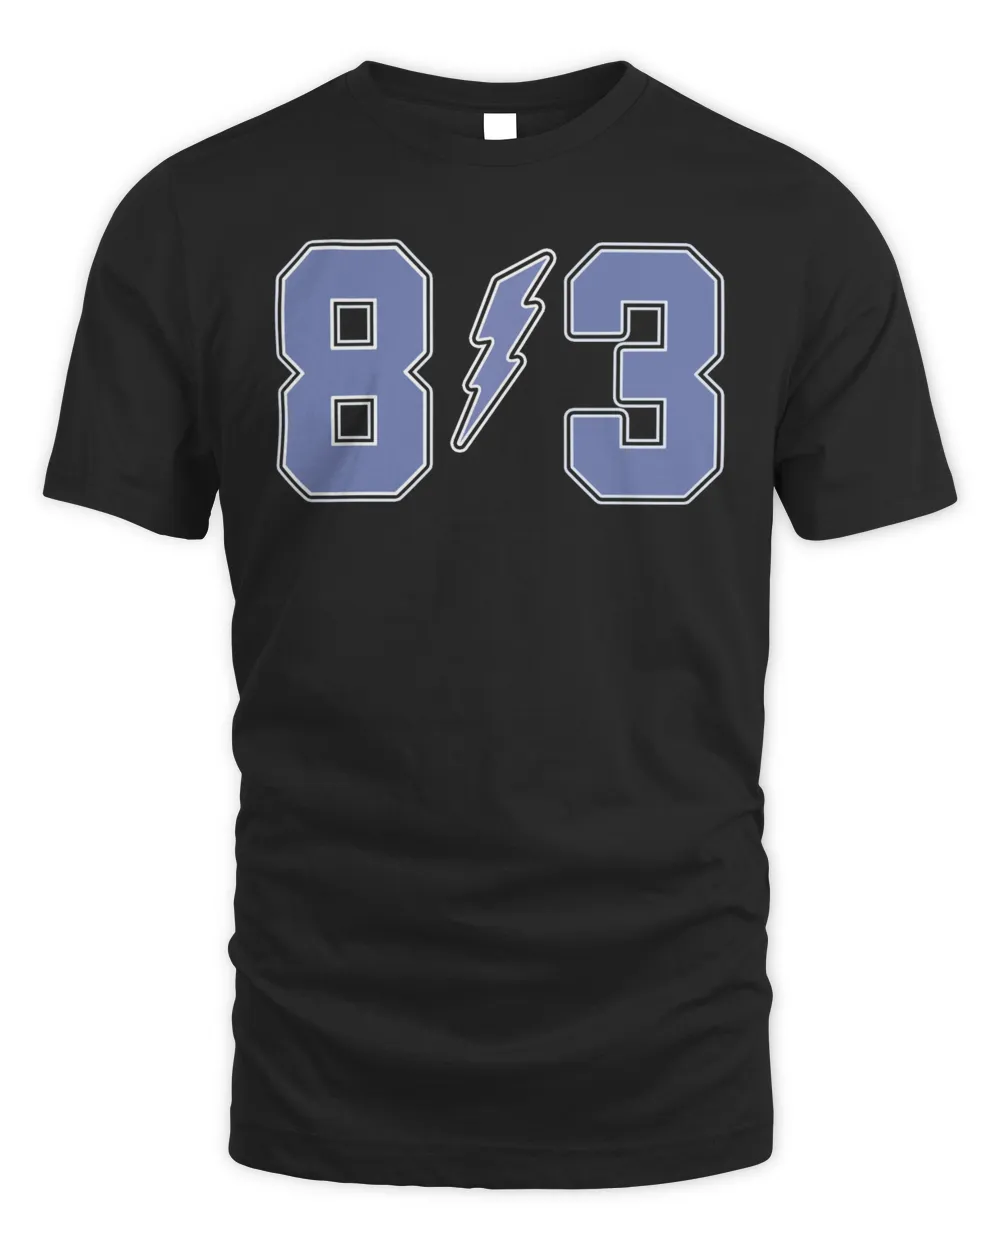 Tampa Bay Lightning 813 Hockey For the Bay Clothing Co Tee Shirt